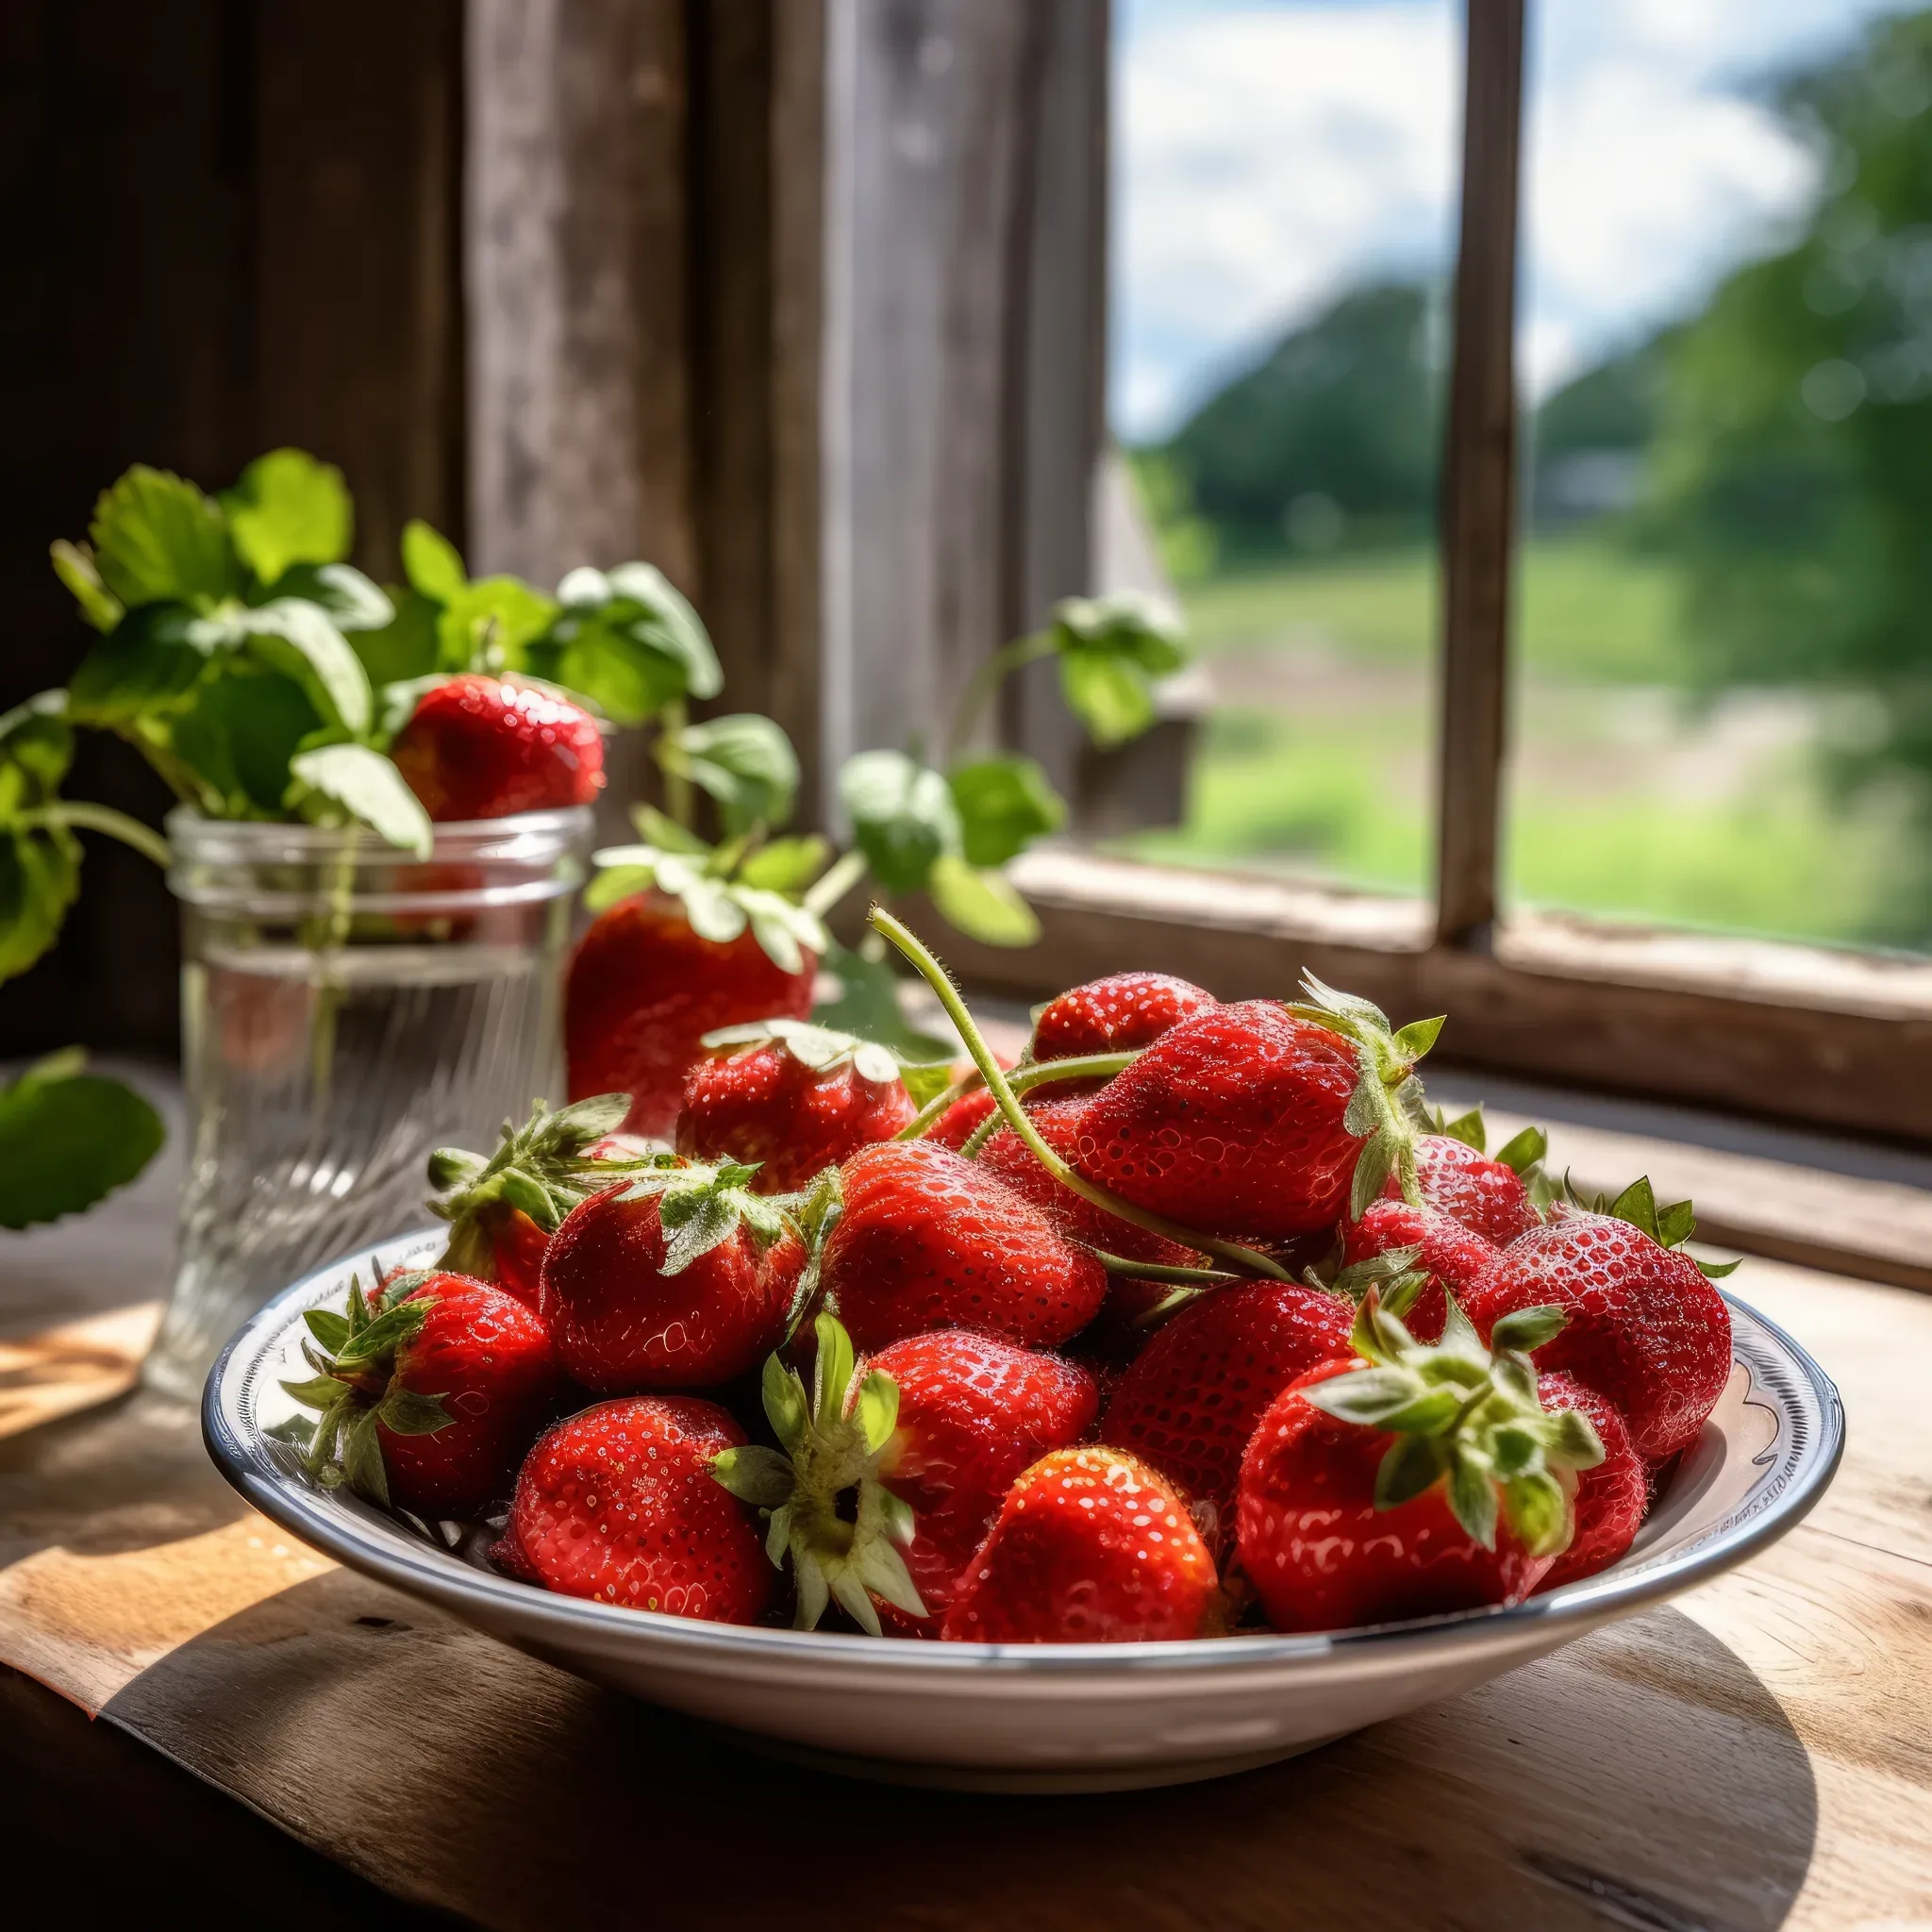 Organic farm Wedding Venue: a bowl of strawberries on a wooden table.